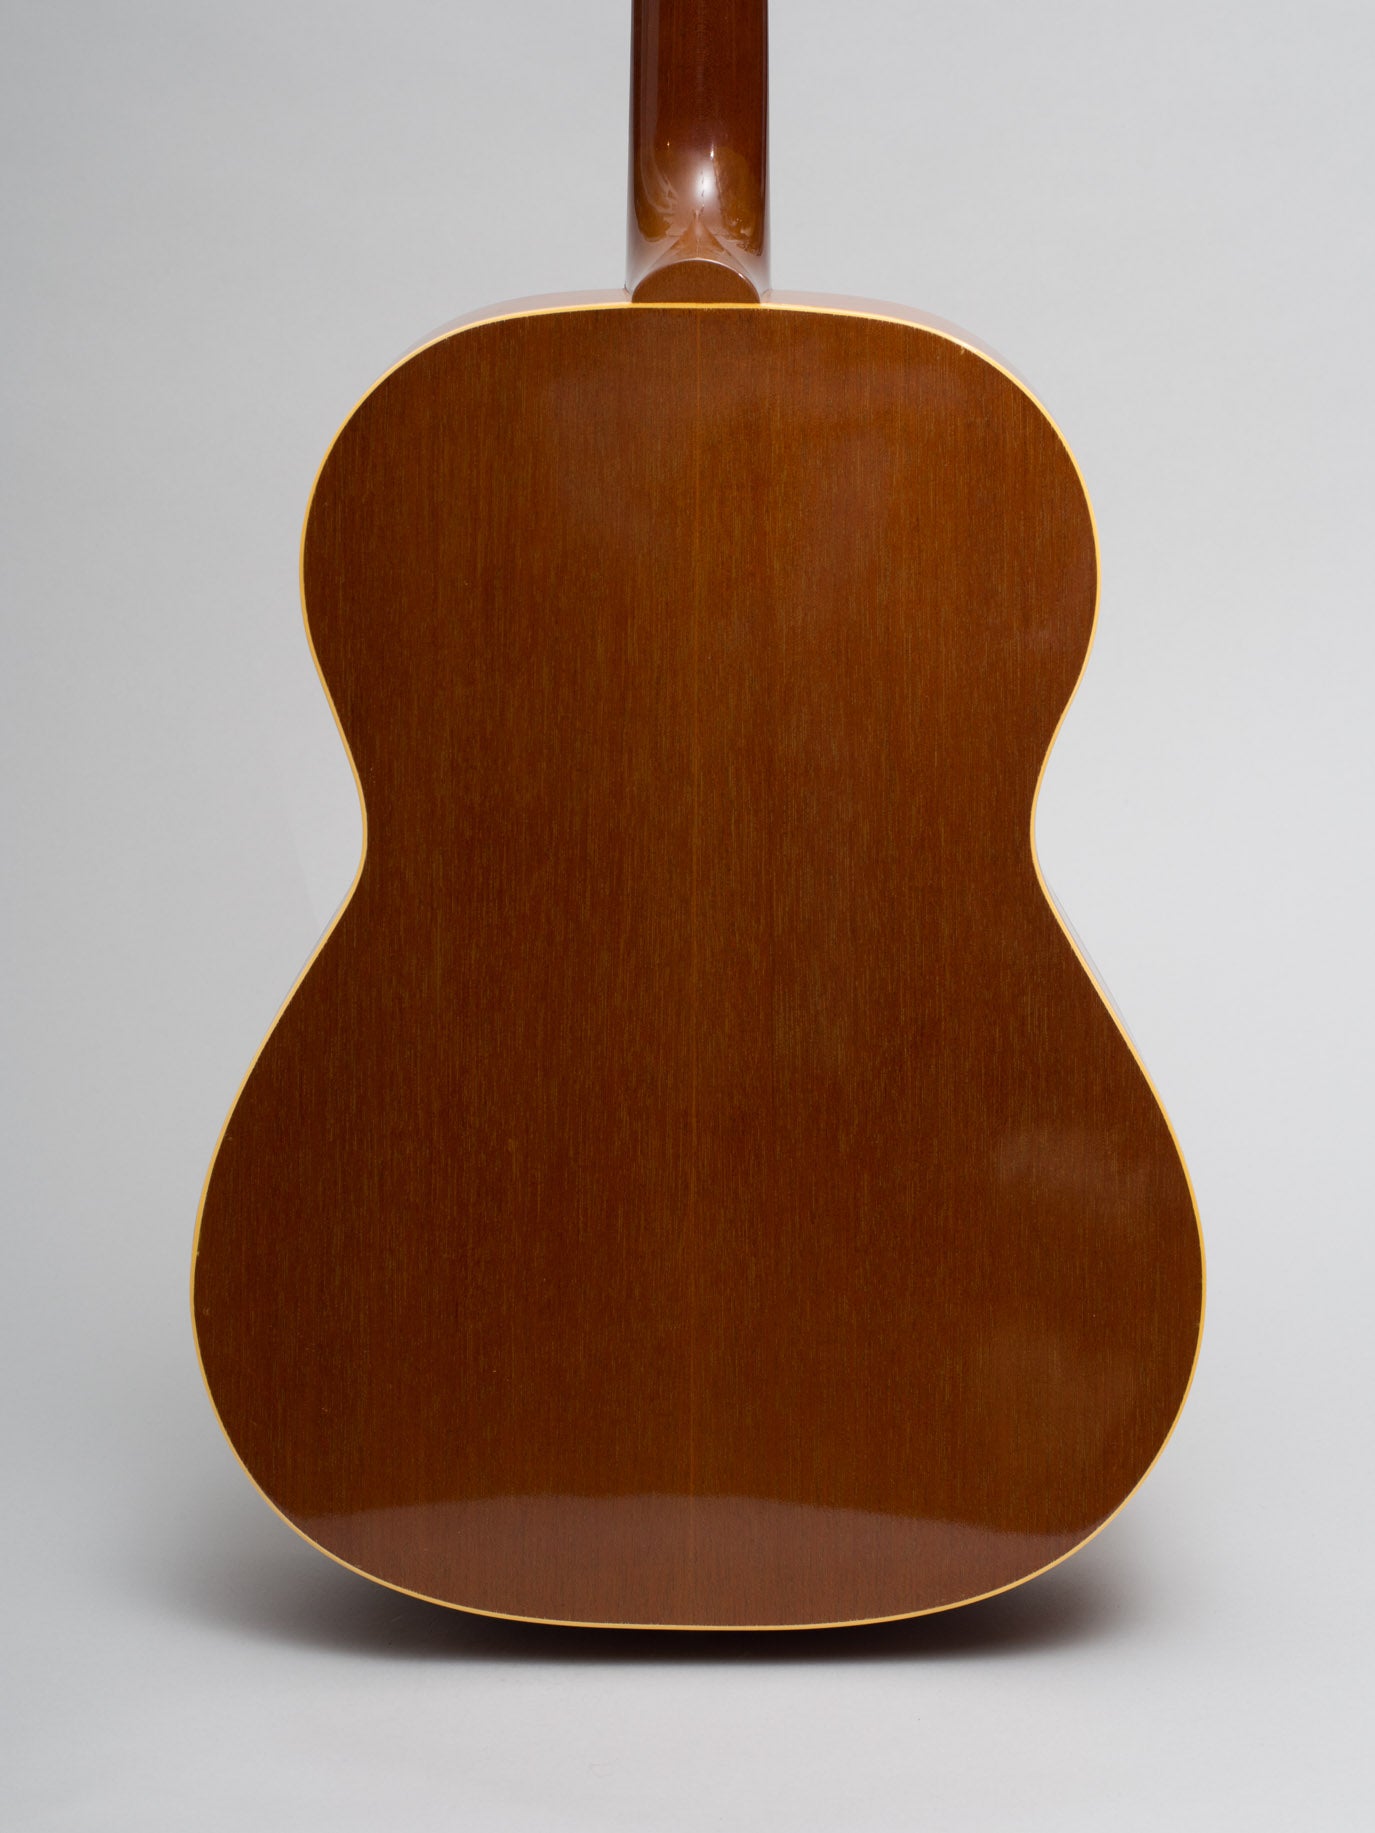 1959 Gibson LG-3